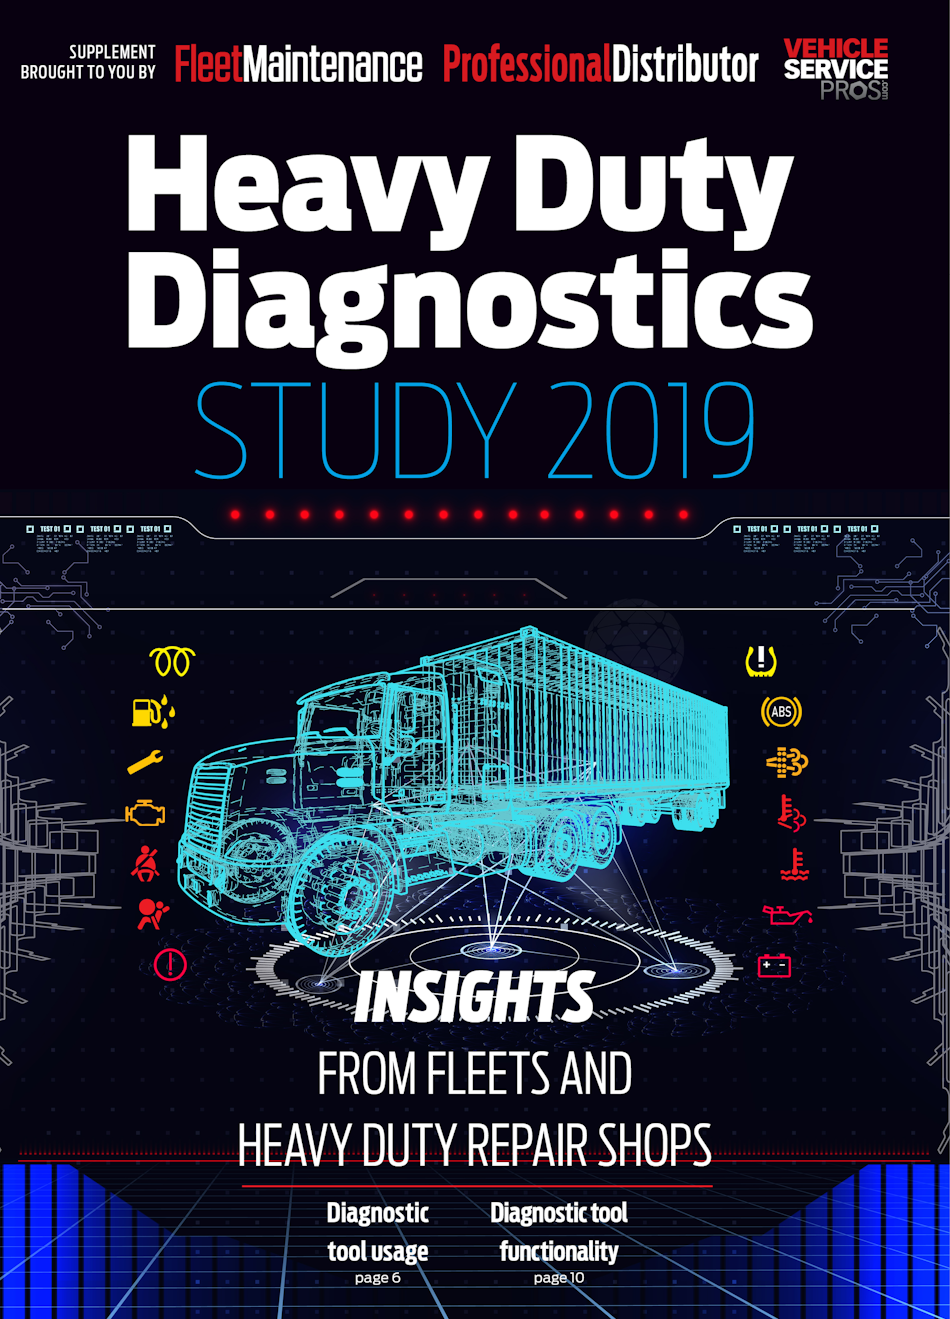 Heavy Duty Diagnostics Study - October 2019 cover image